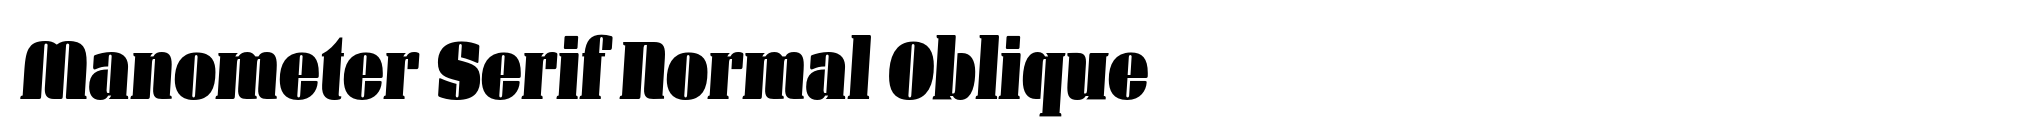 Manometer Serif Normal Oblique image